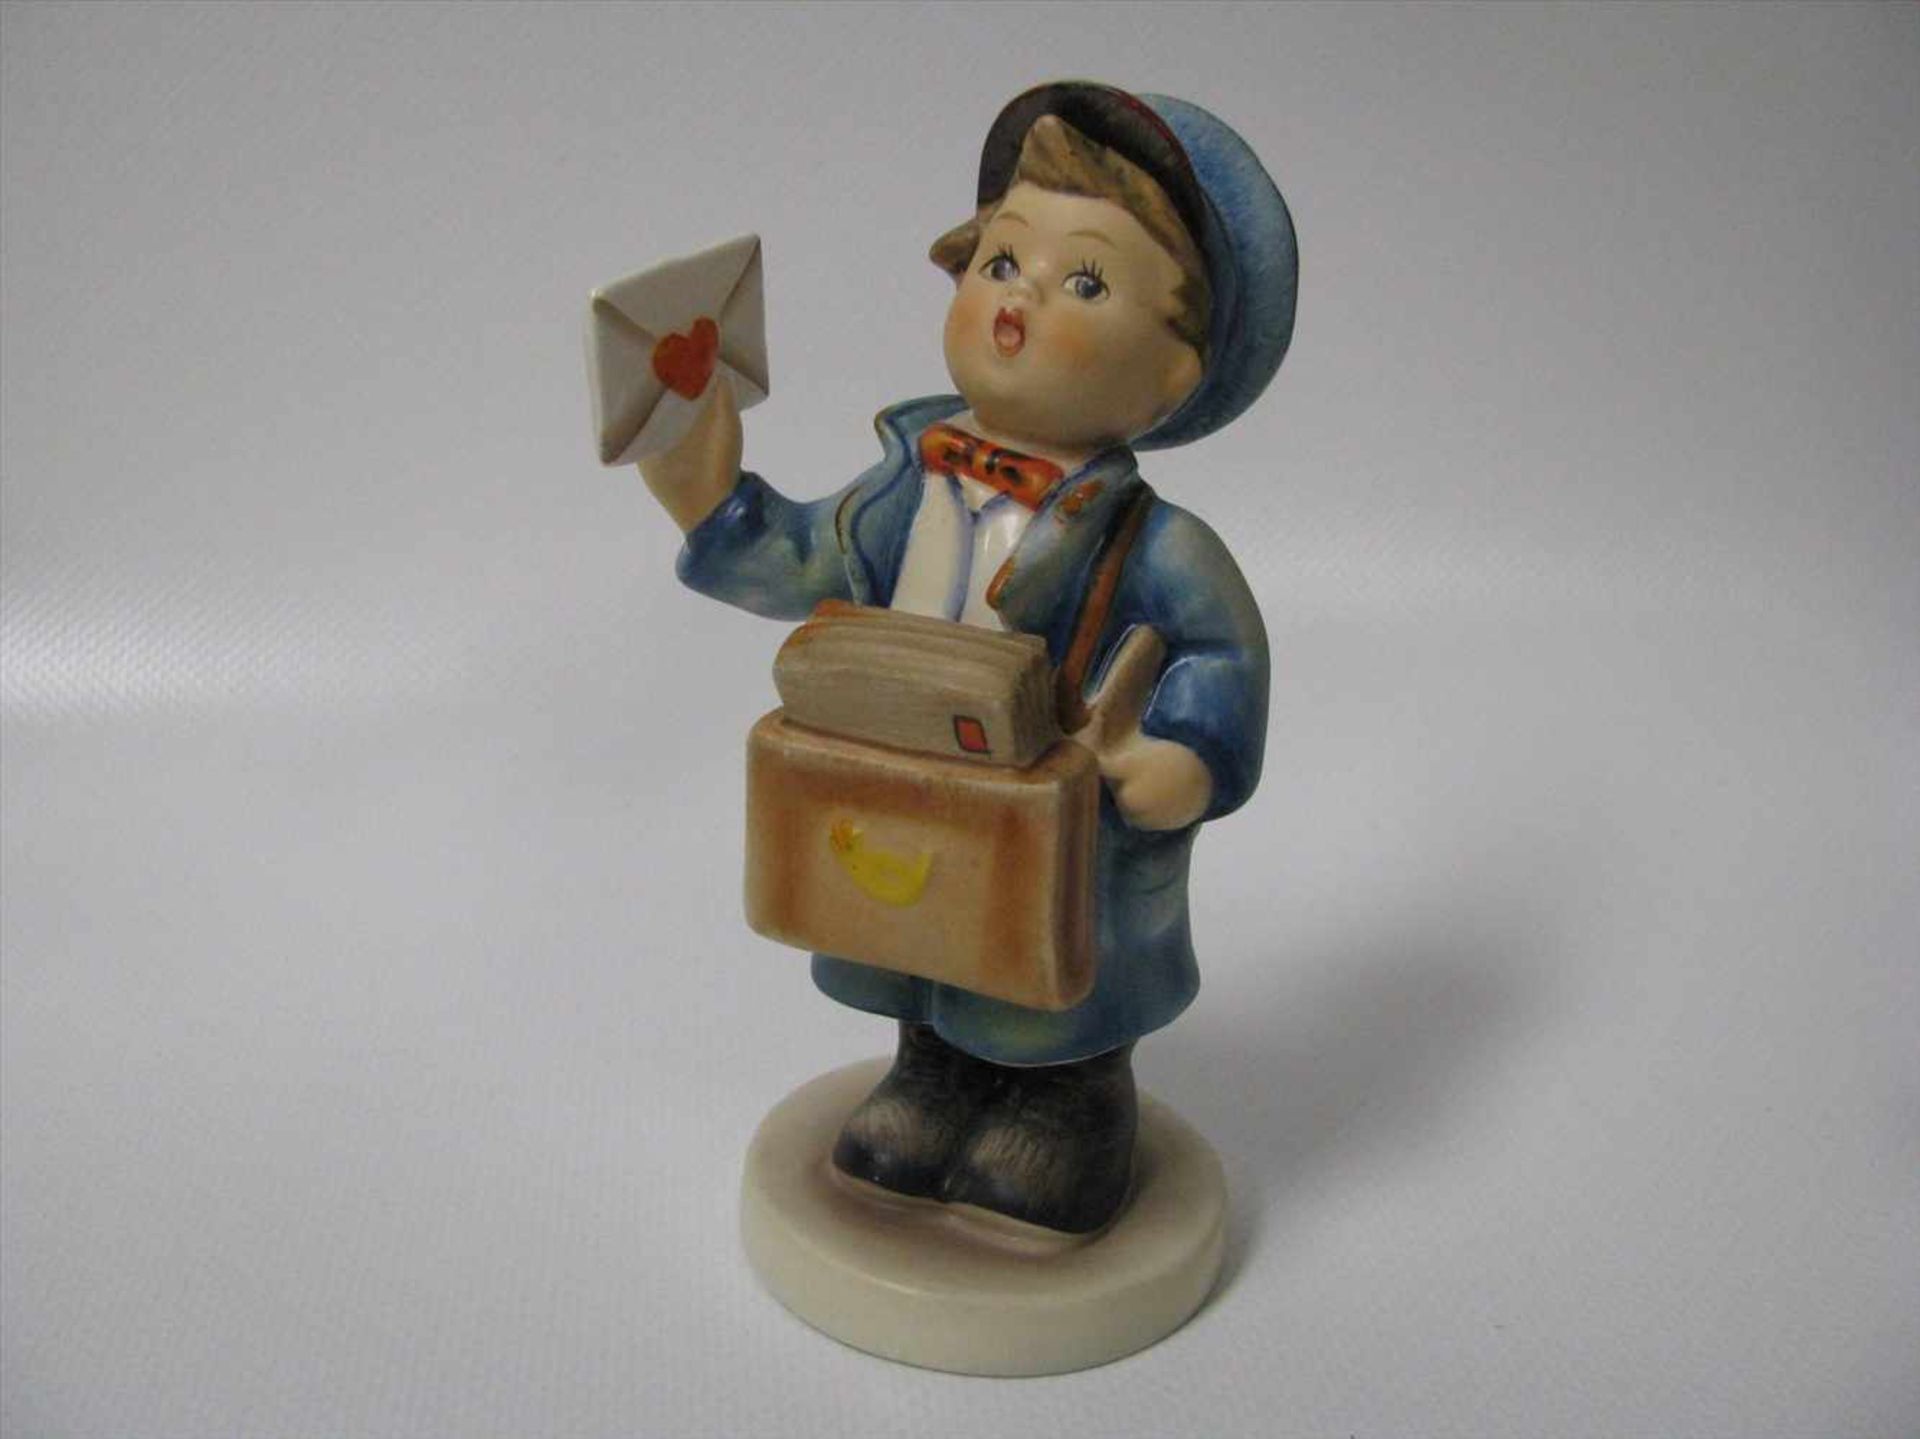 Hummel Figur, Eilbote - Postmann, Goebel Porzellan, polychrom bemalt, Nr. 119, h 12 cm.